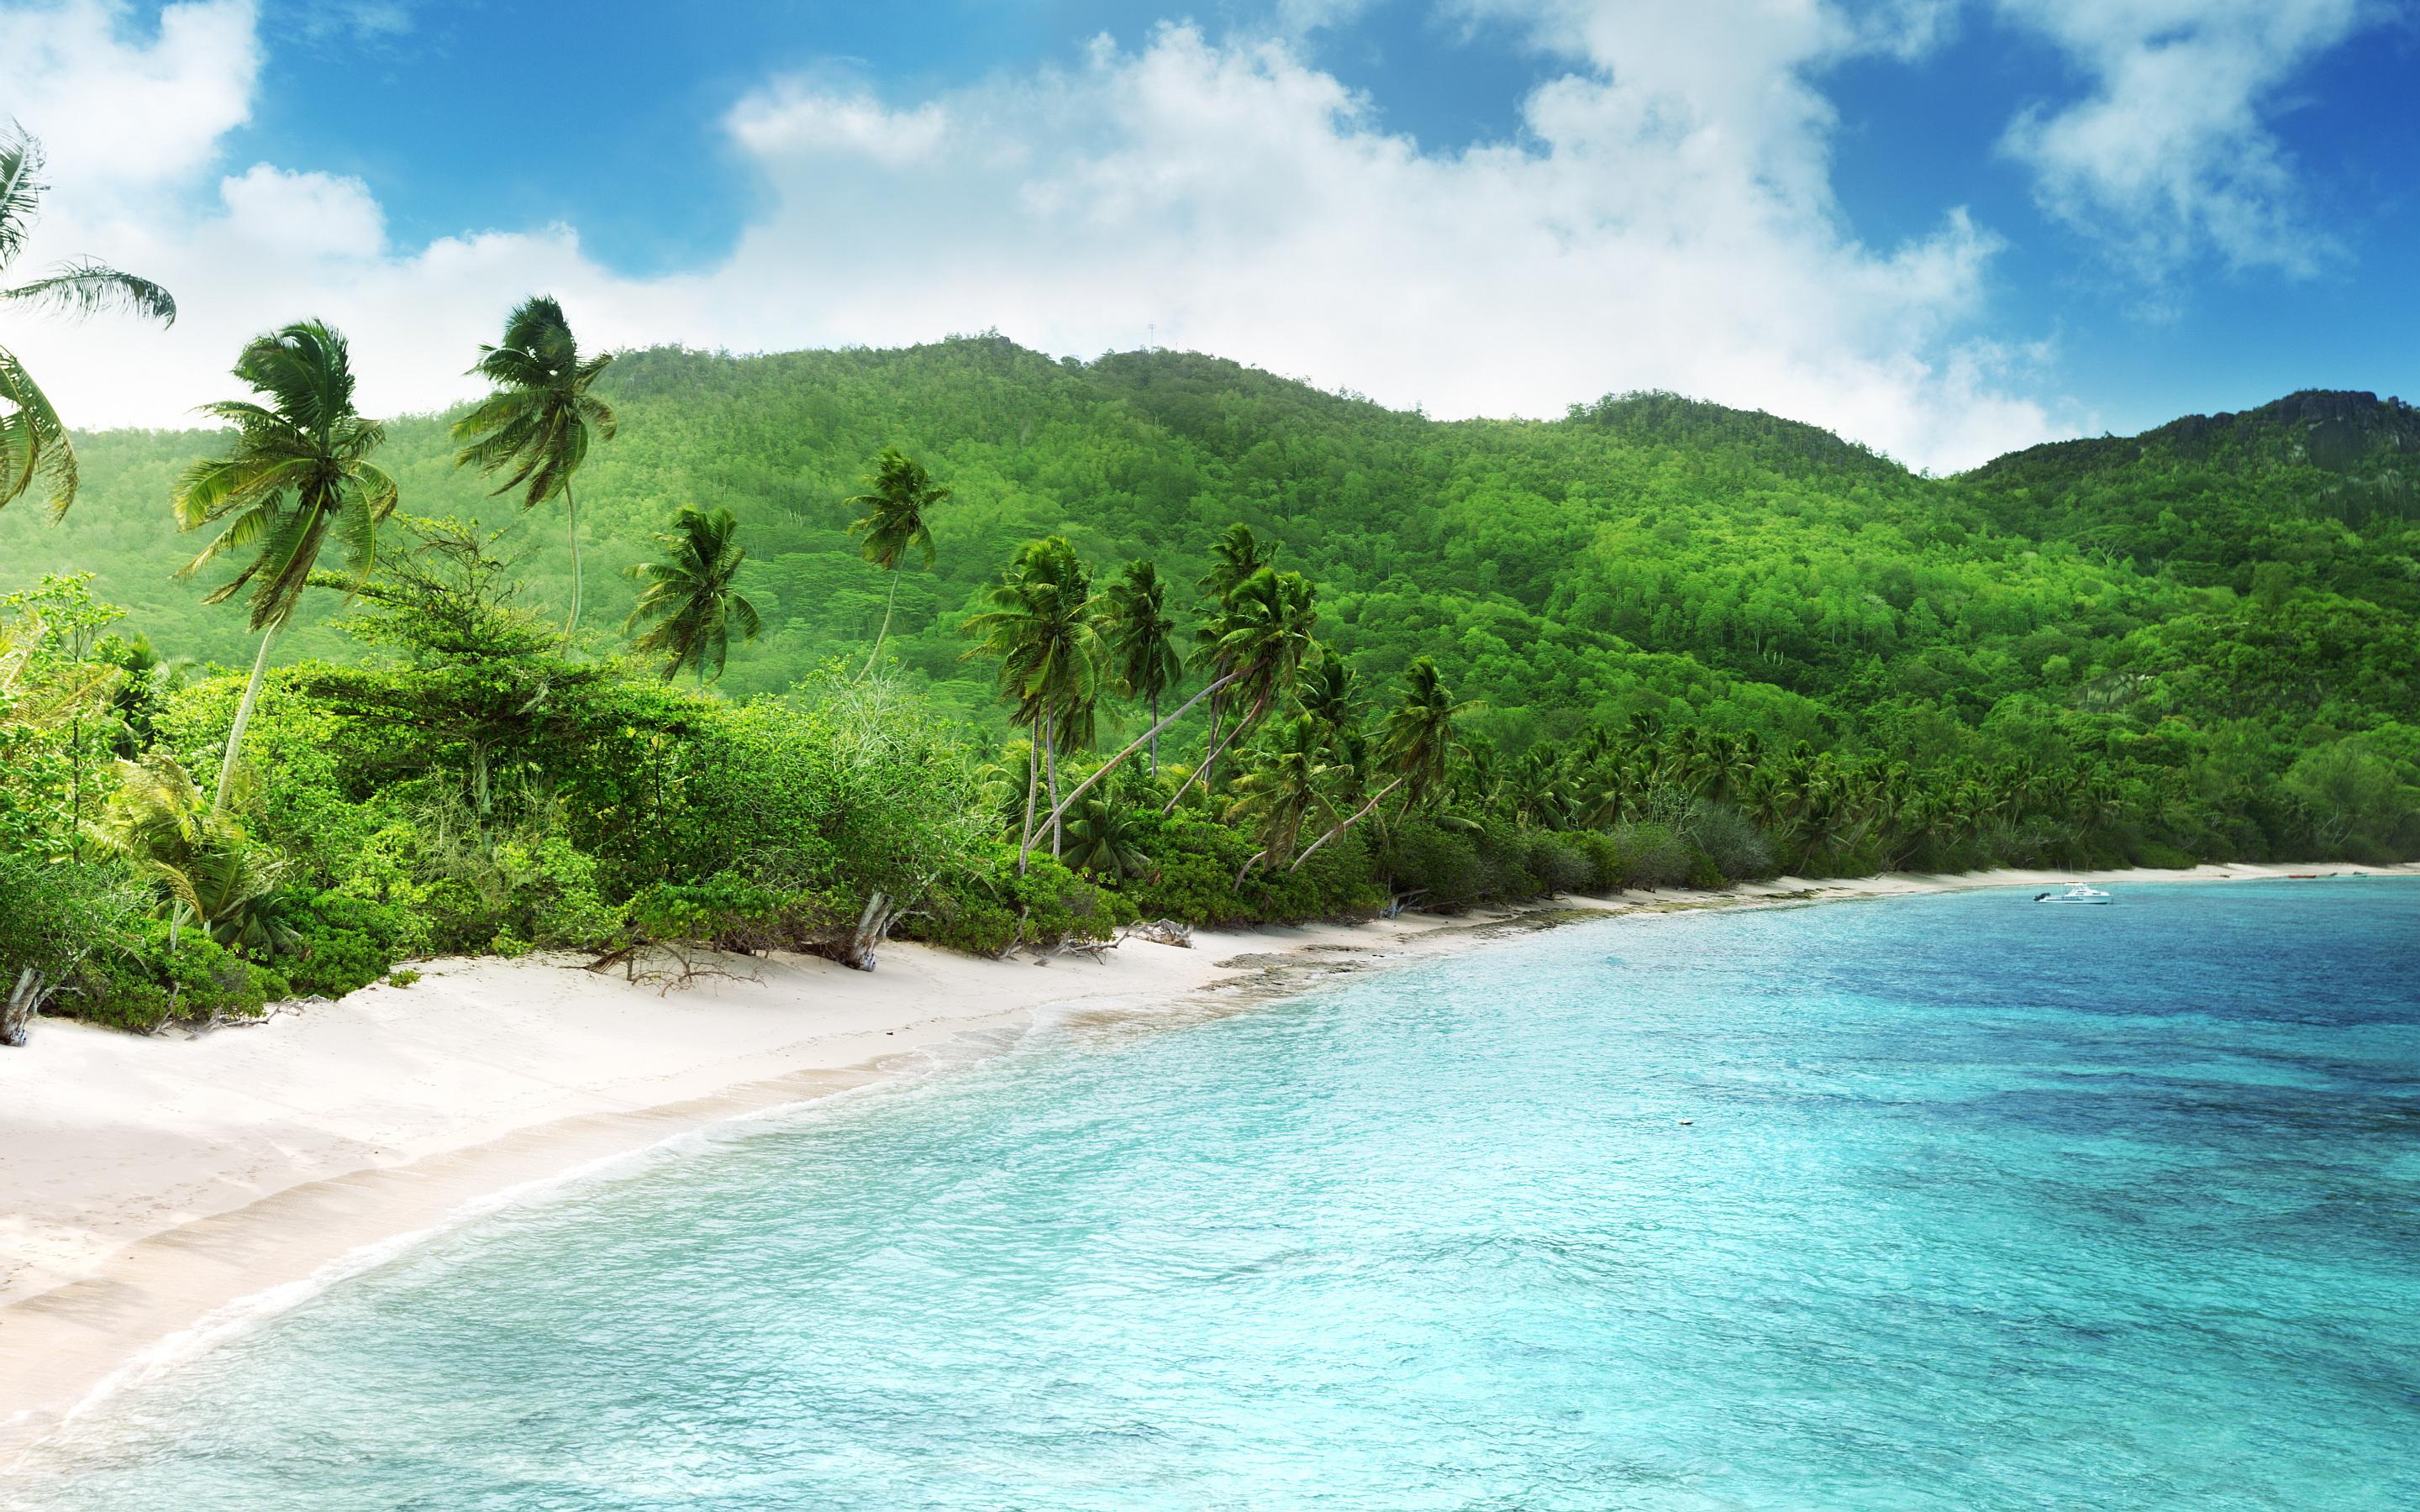 Download Tropical Beach Wallpaper, HD Backgrounds Download - itl.cat